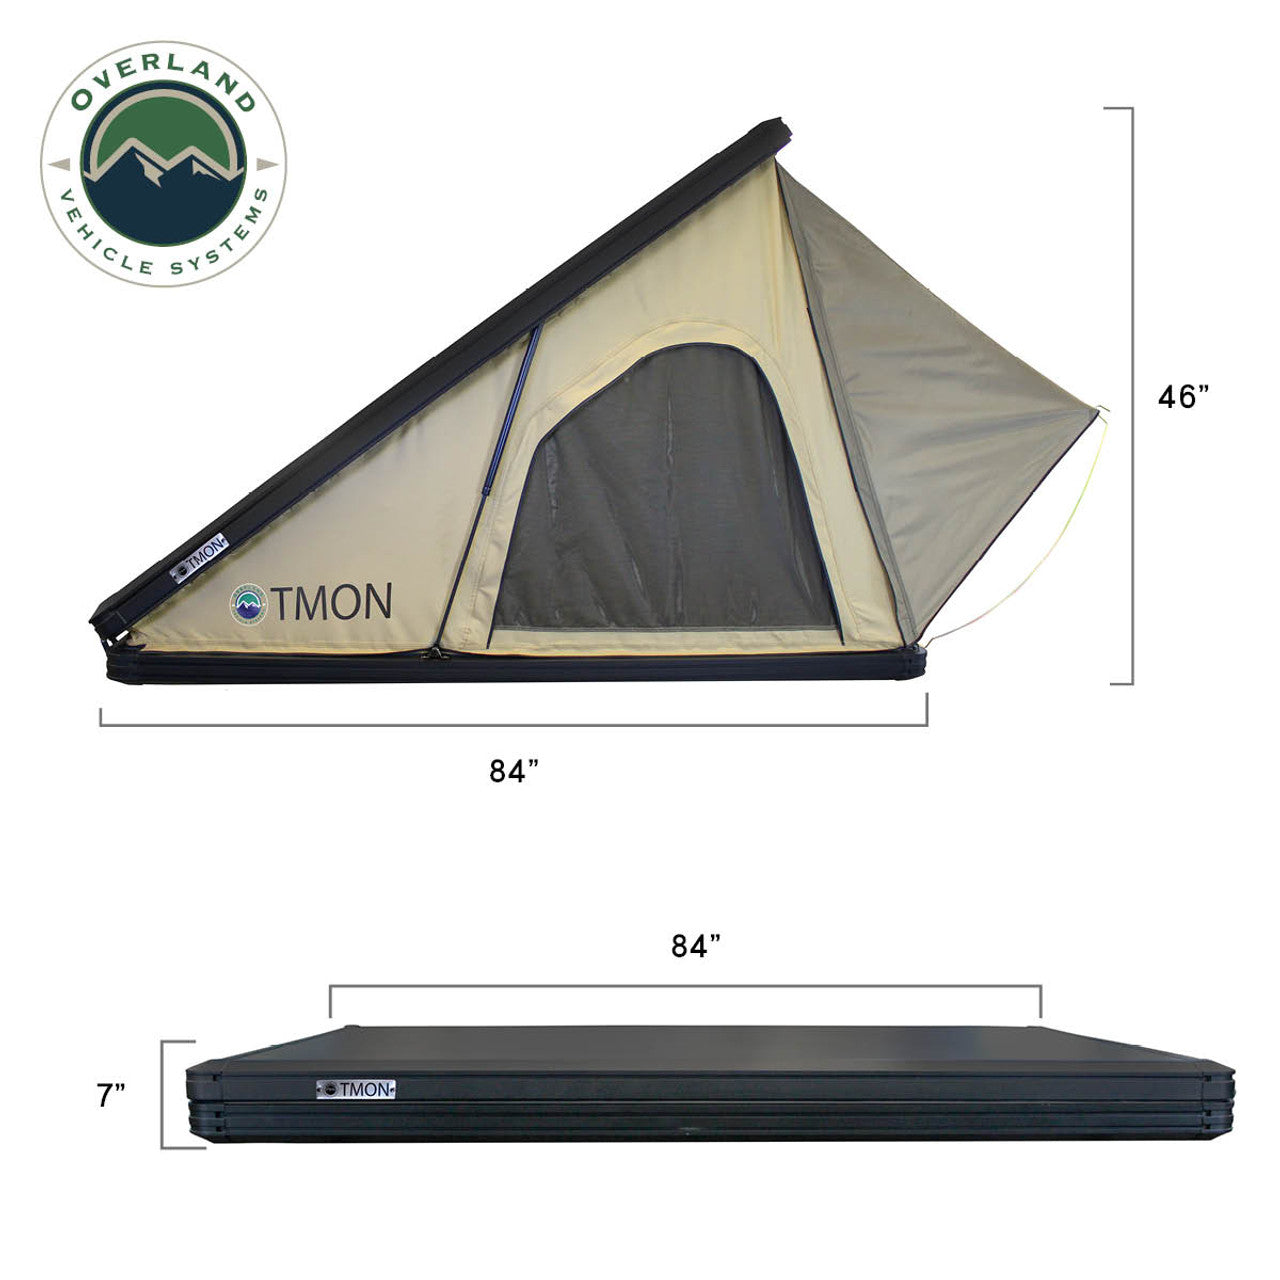 LD TMON Clamshell Aluminum Hard Shell Roof Top Tent - 2 Person Capacity